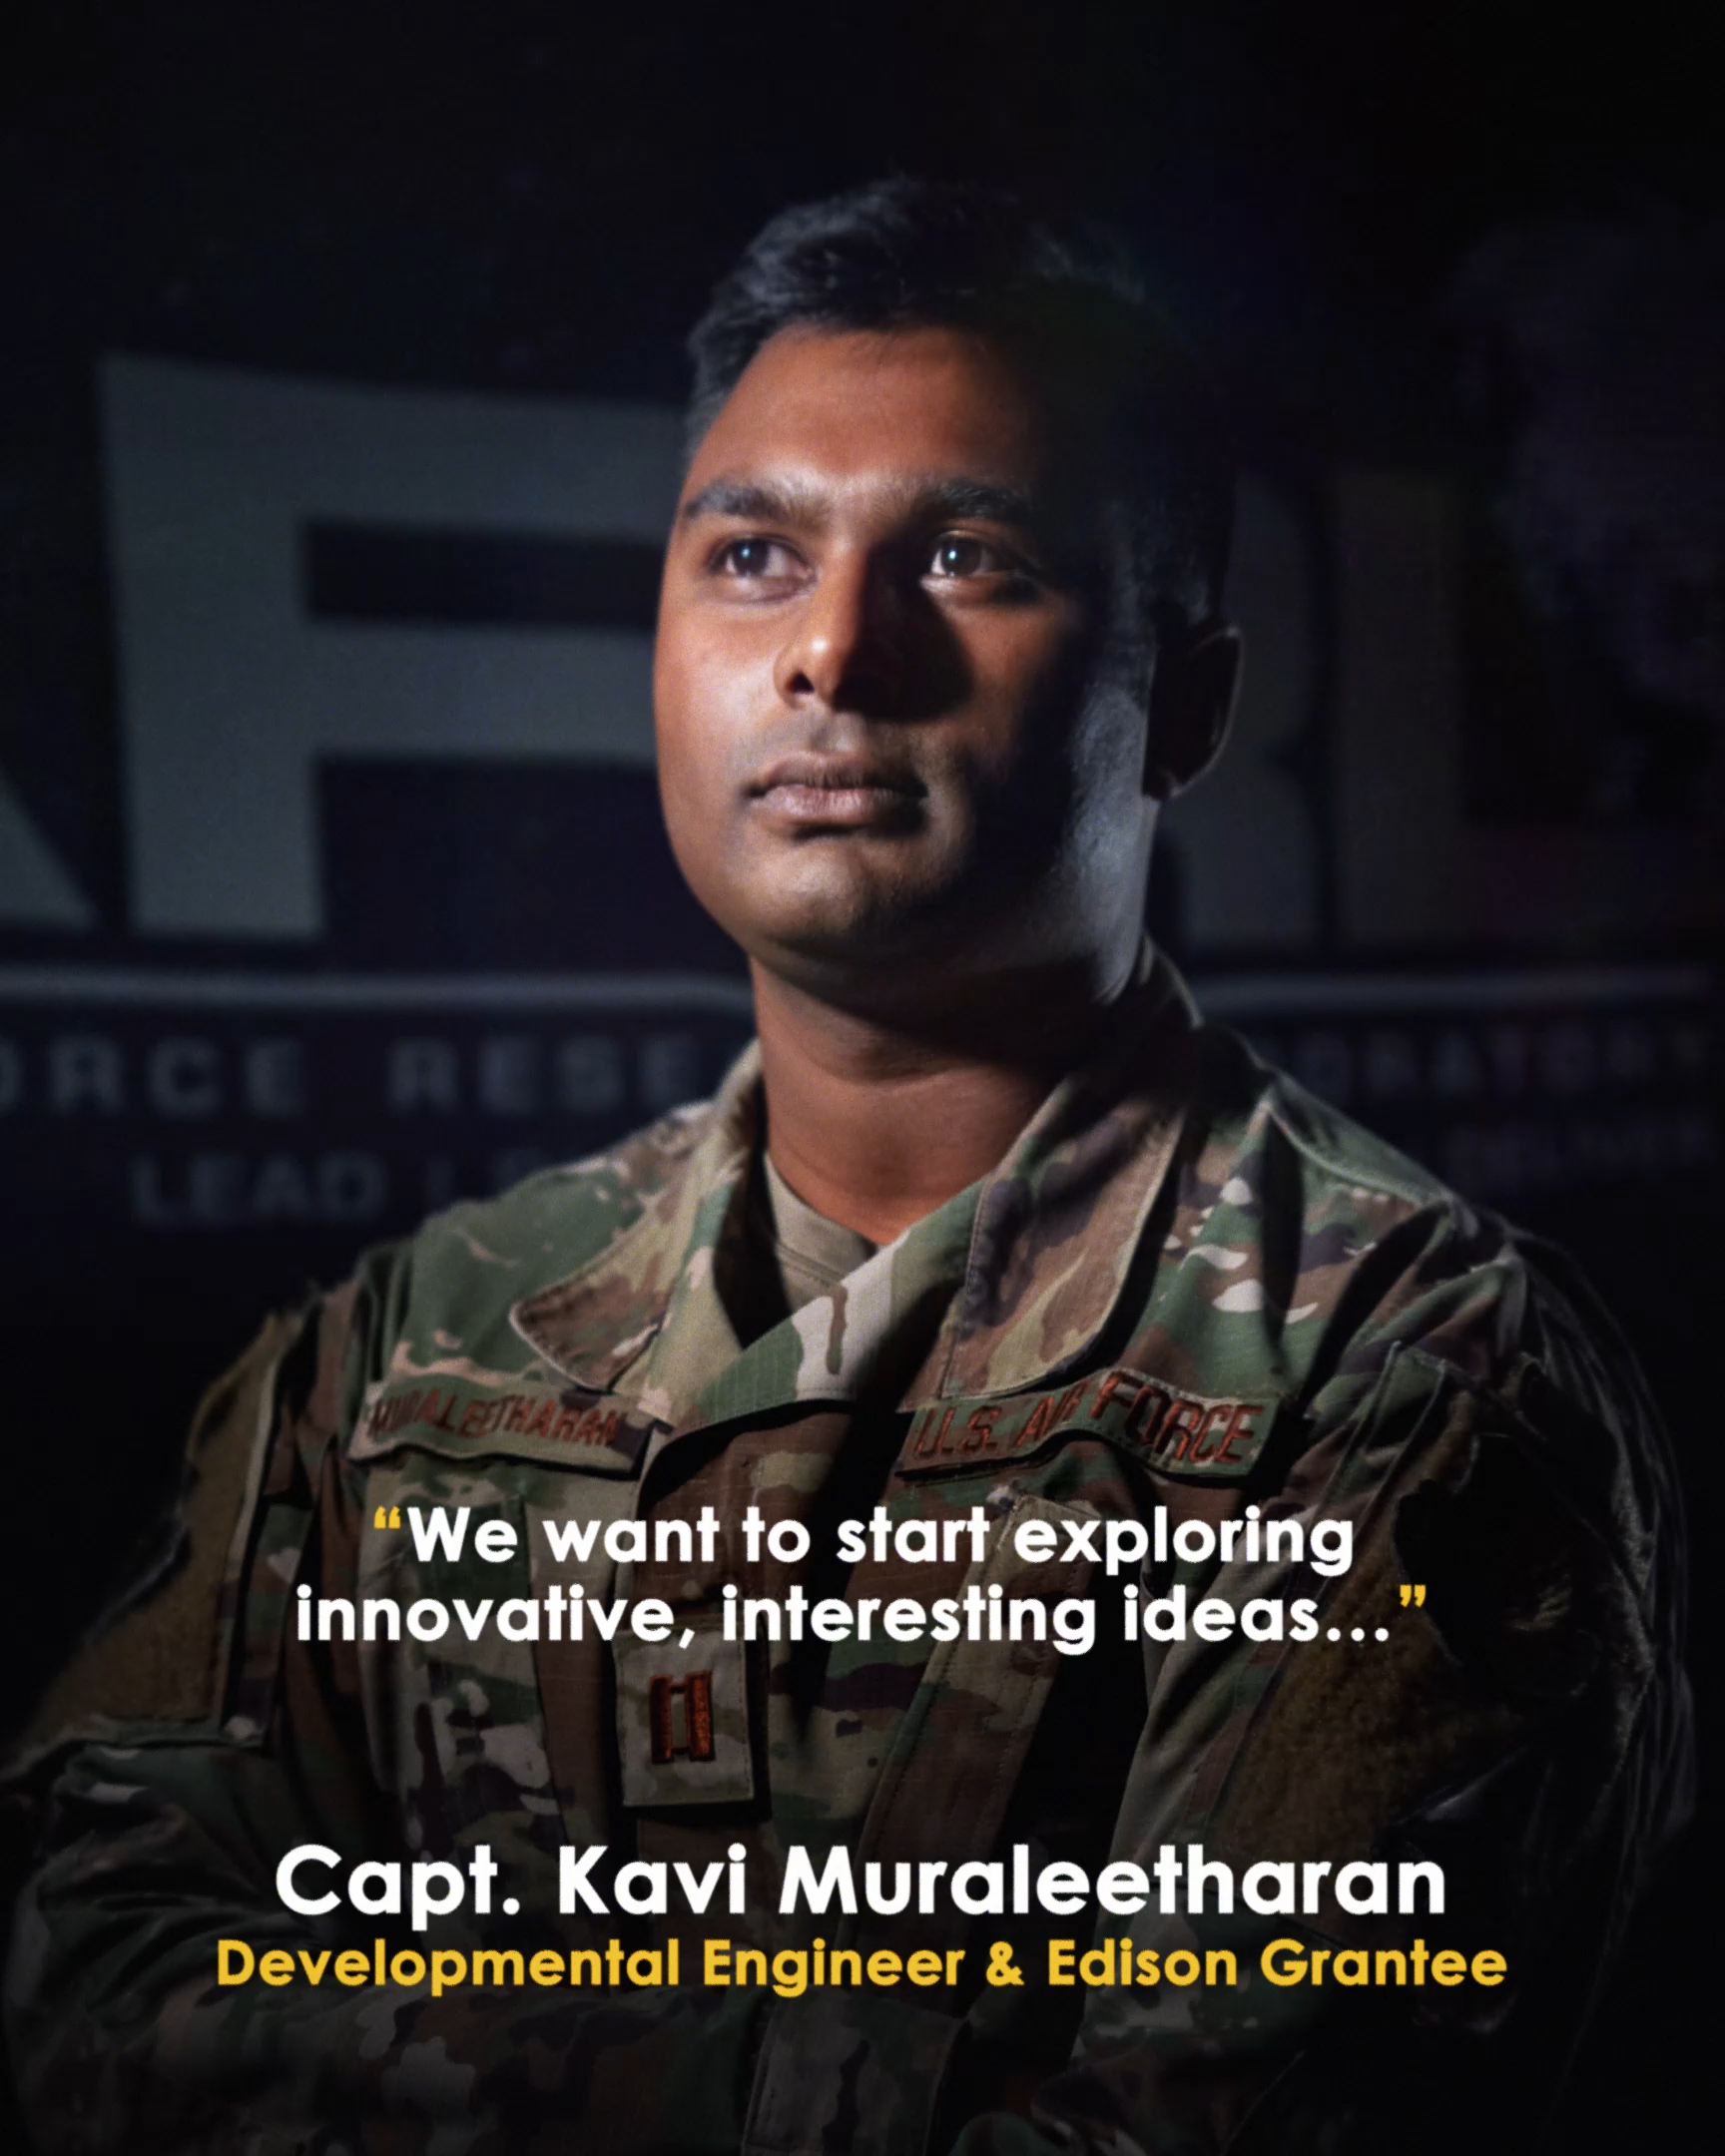 Capt. Kavi Muraleetharan, Developmental Engineer & Edison Grantee